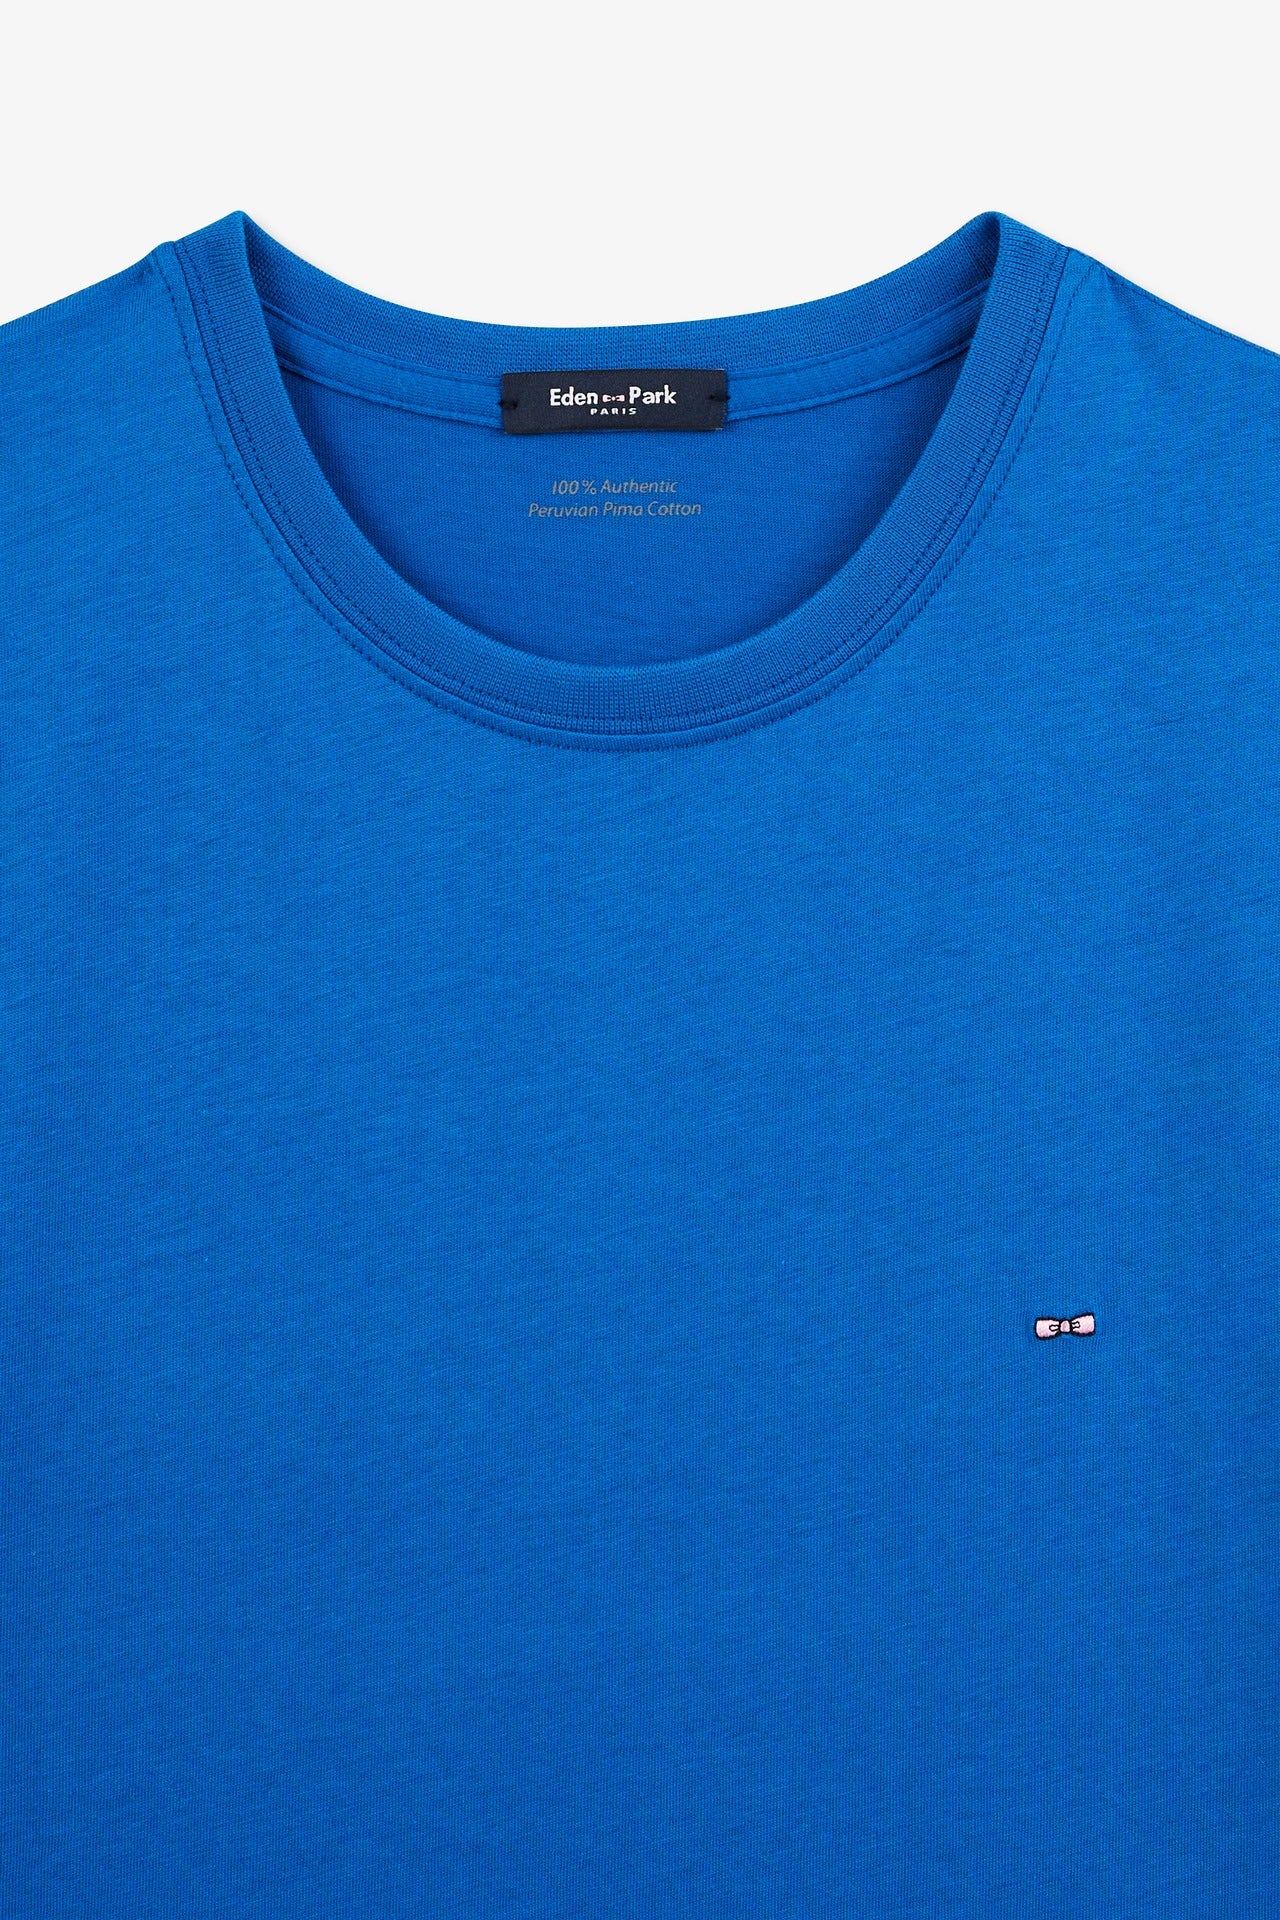 T-shirt bleu à manches courtes